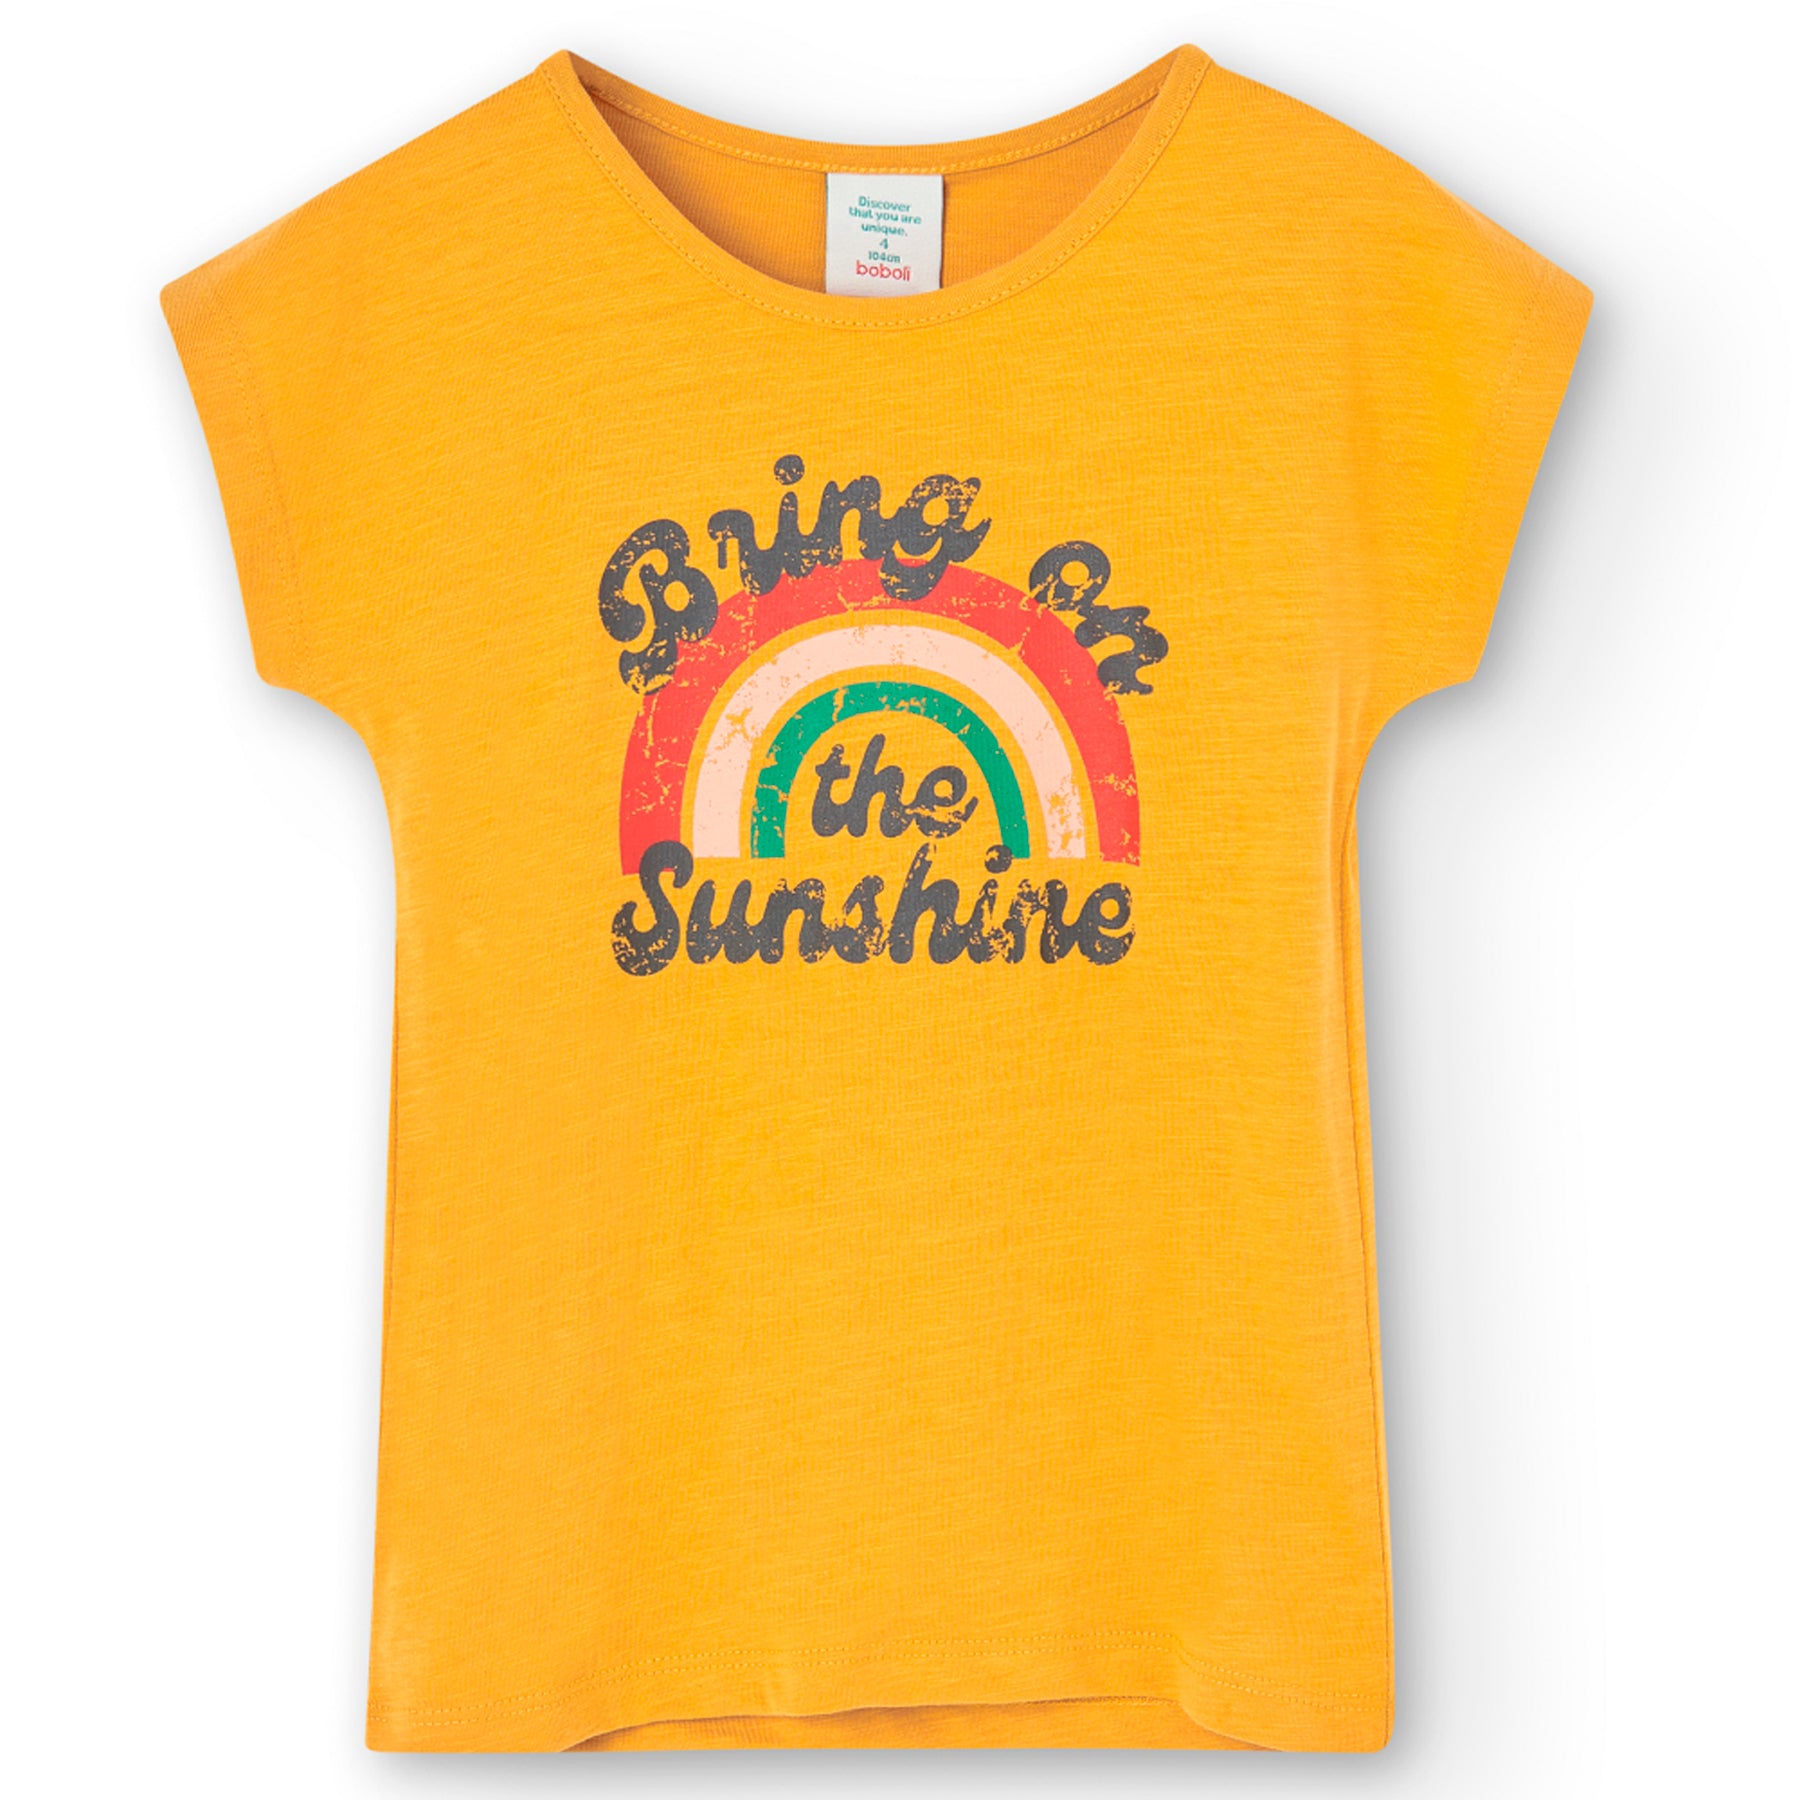 Boboli bring on the sunshine t-shirt